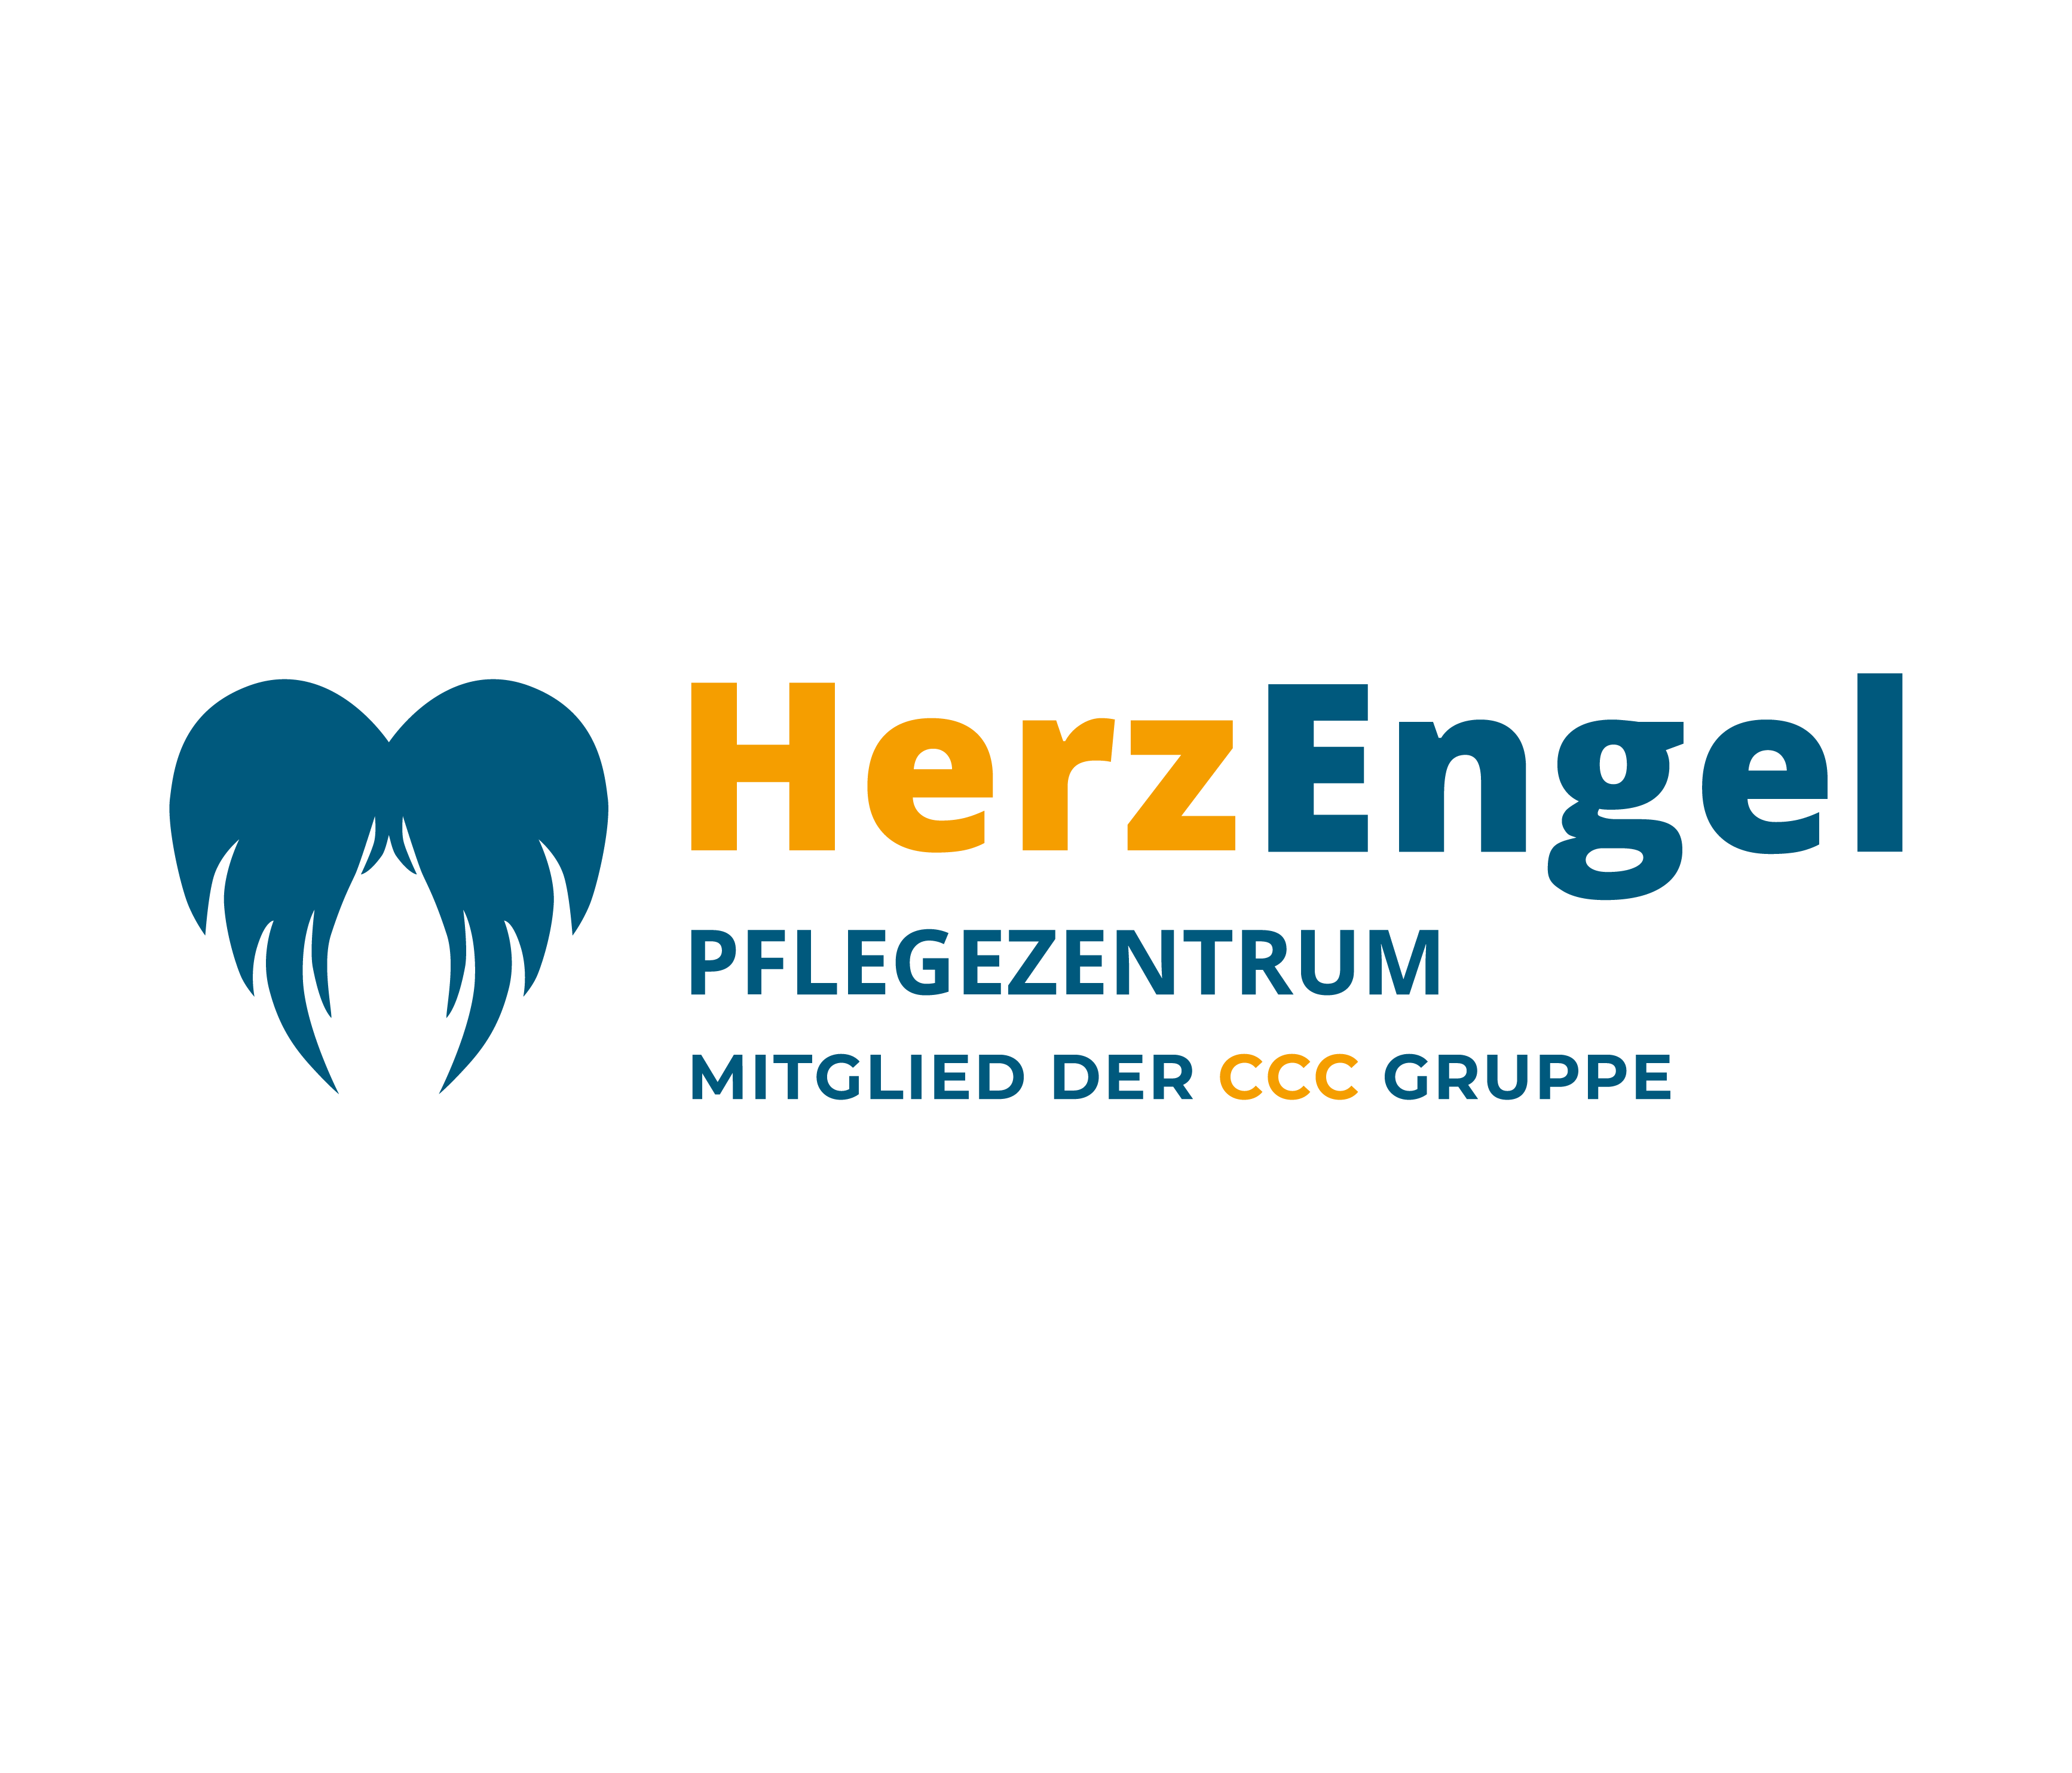 ccc-logo herzengel